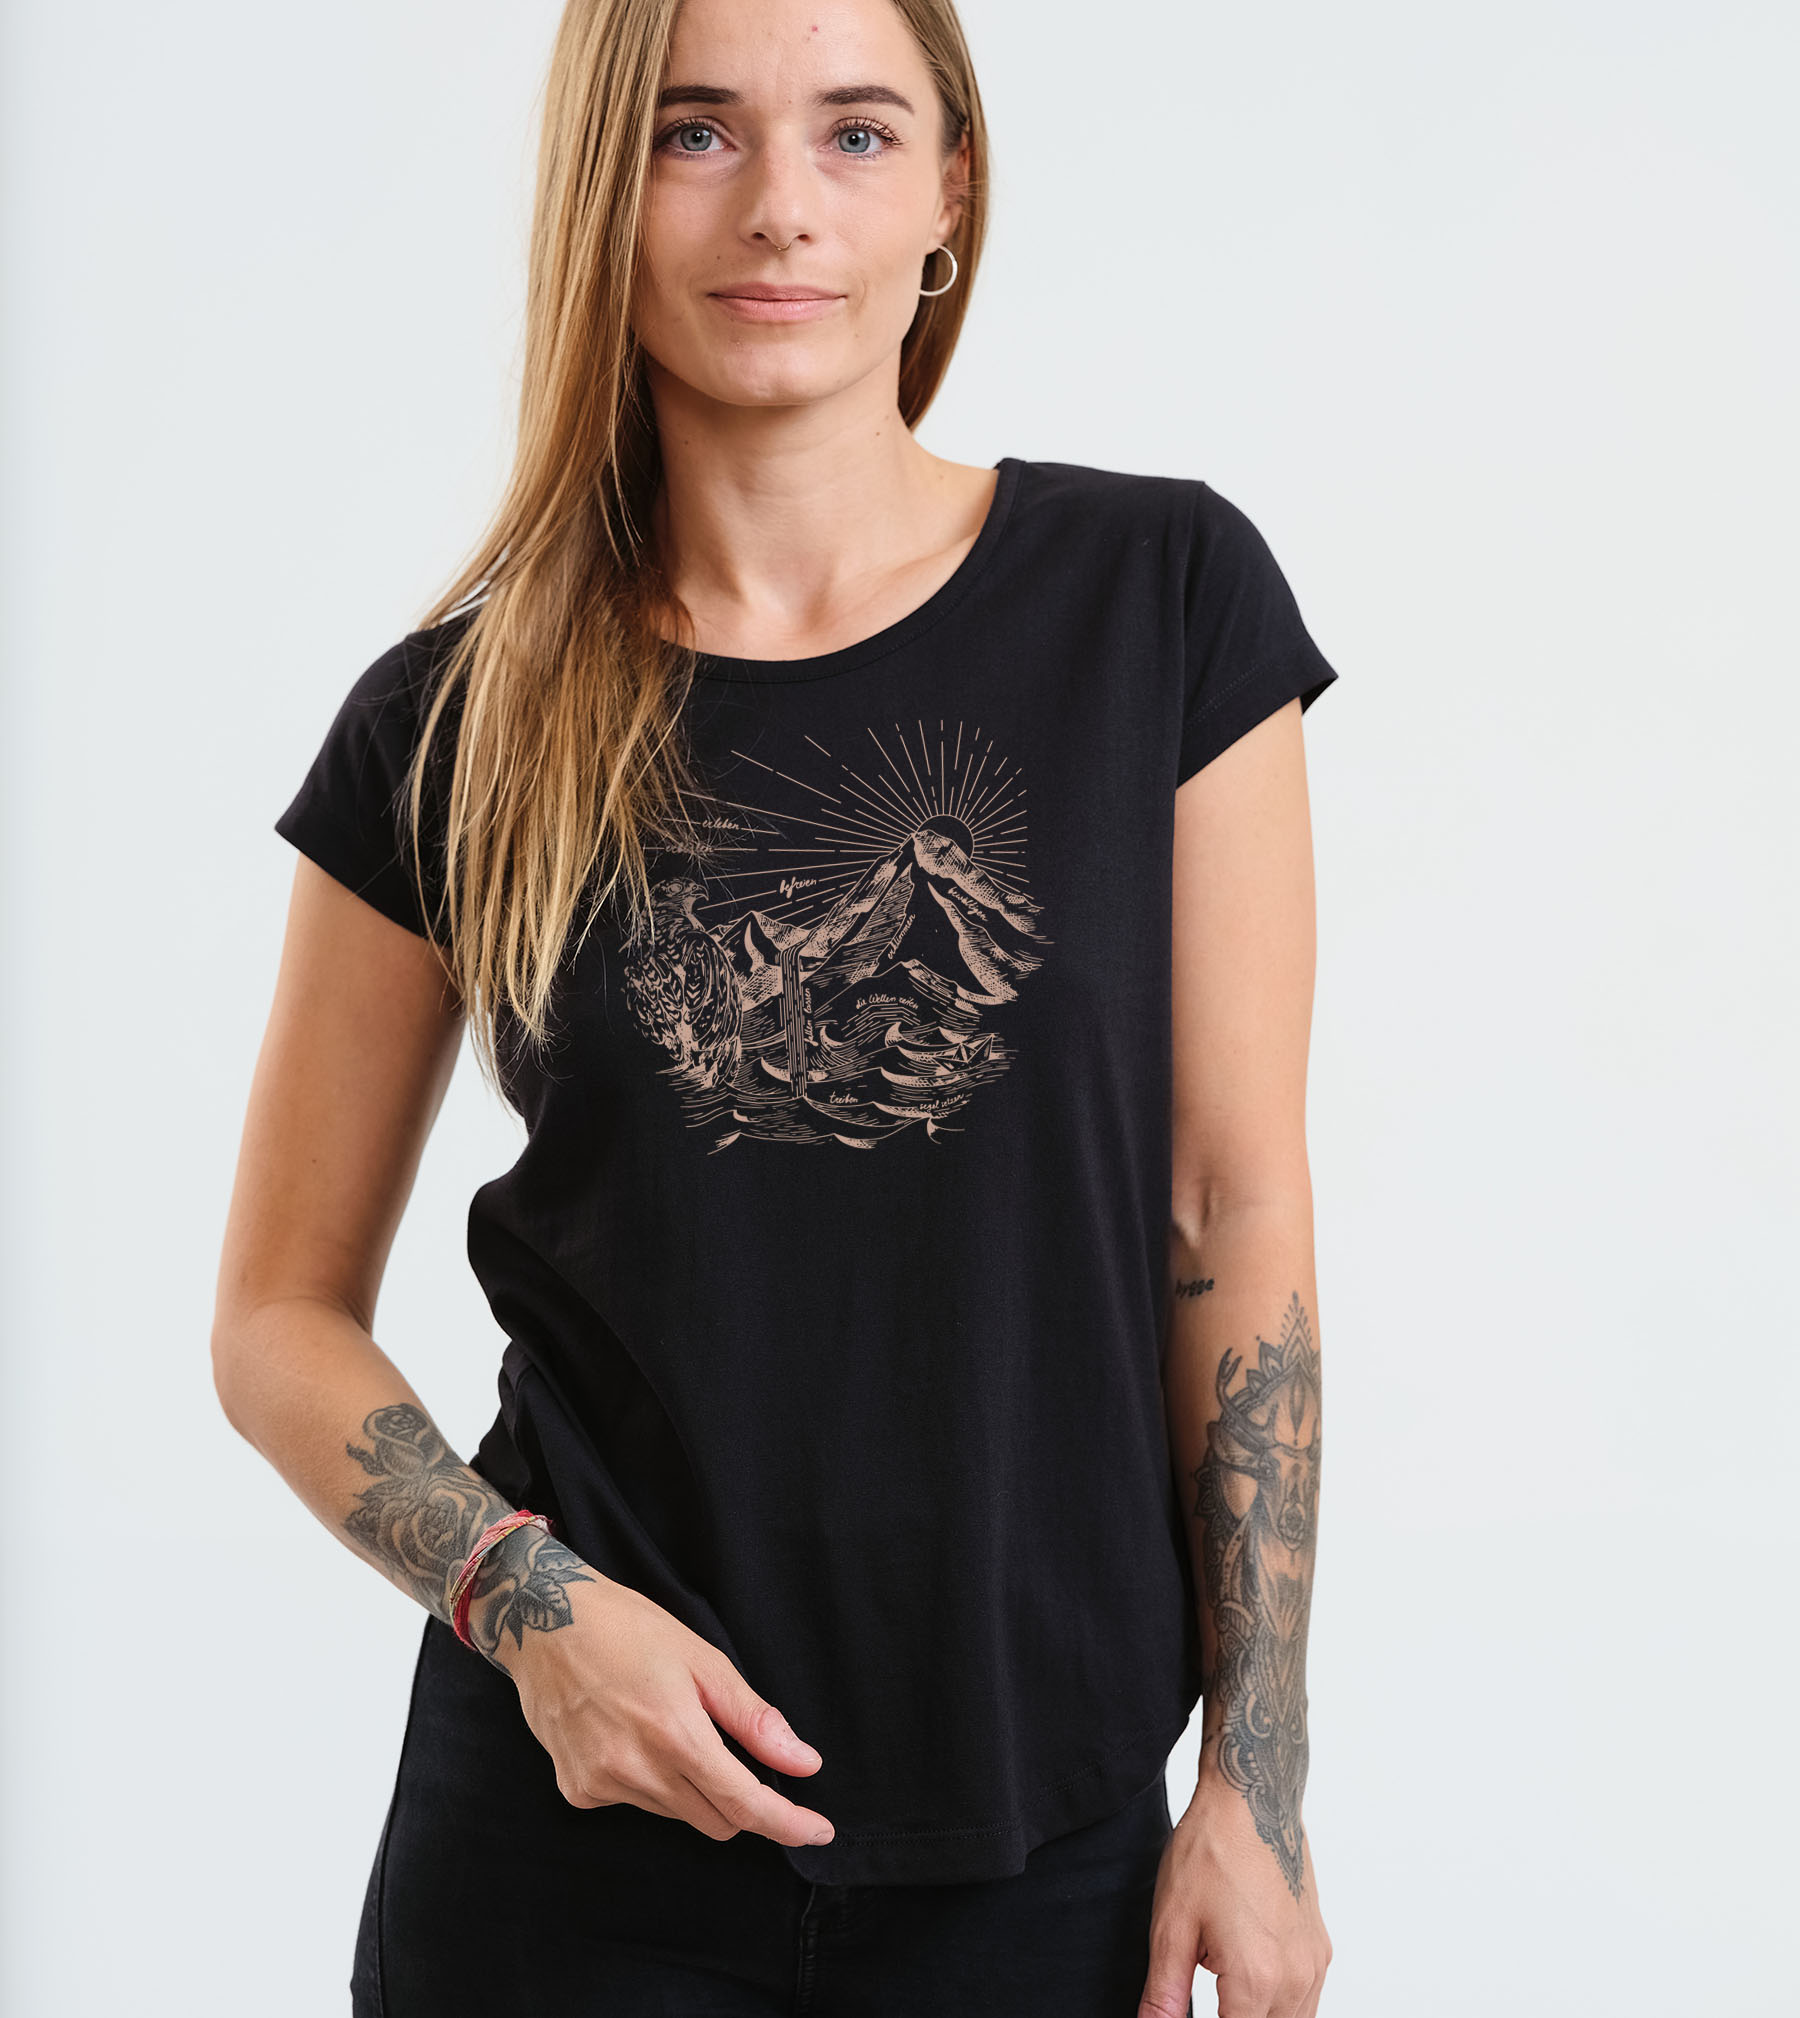 Freedom Knitwear Built-In Bra Shirt - Black XL in Freedom